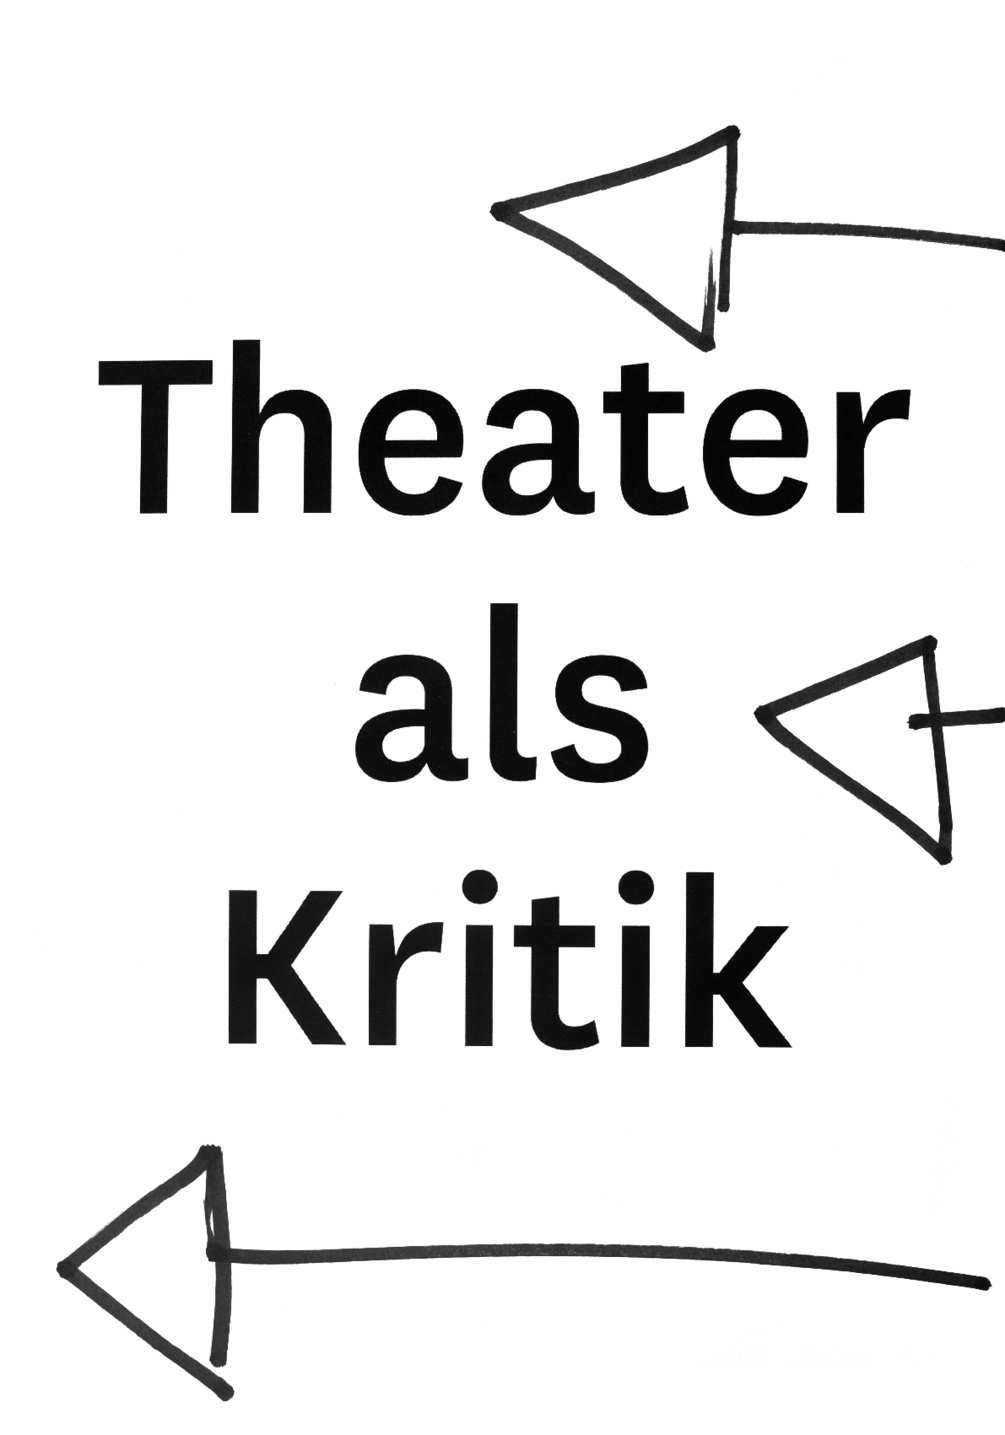 theater-as-critique-slip-30-1005x1435px